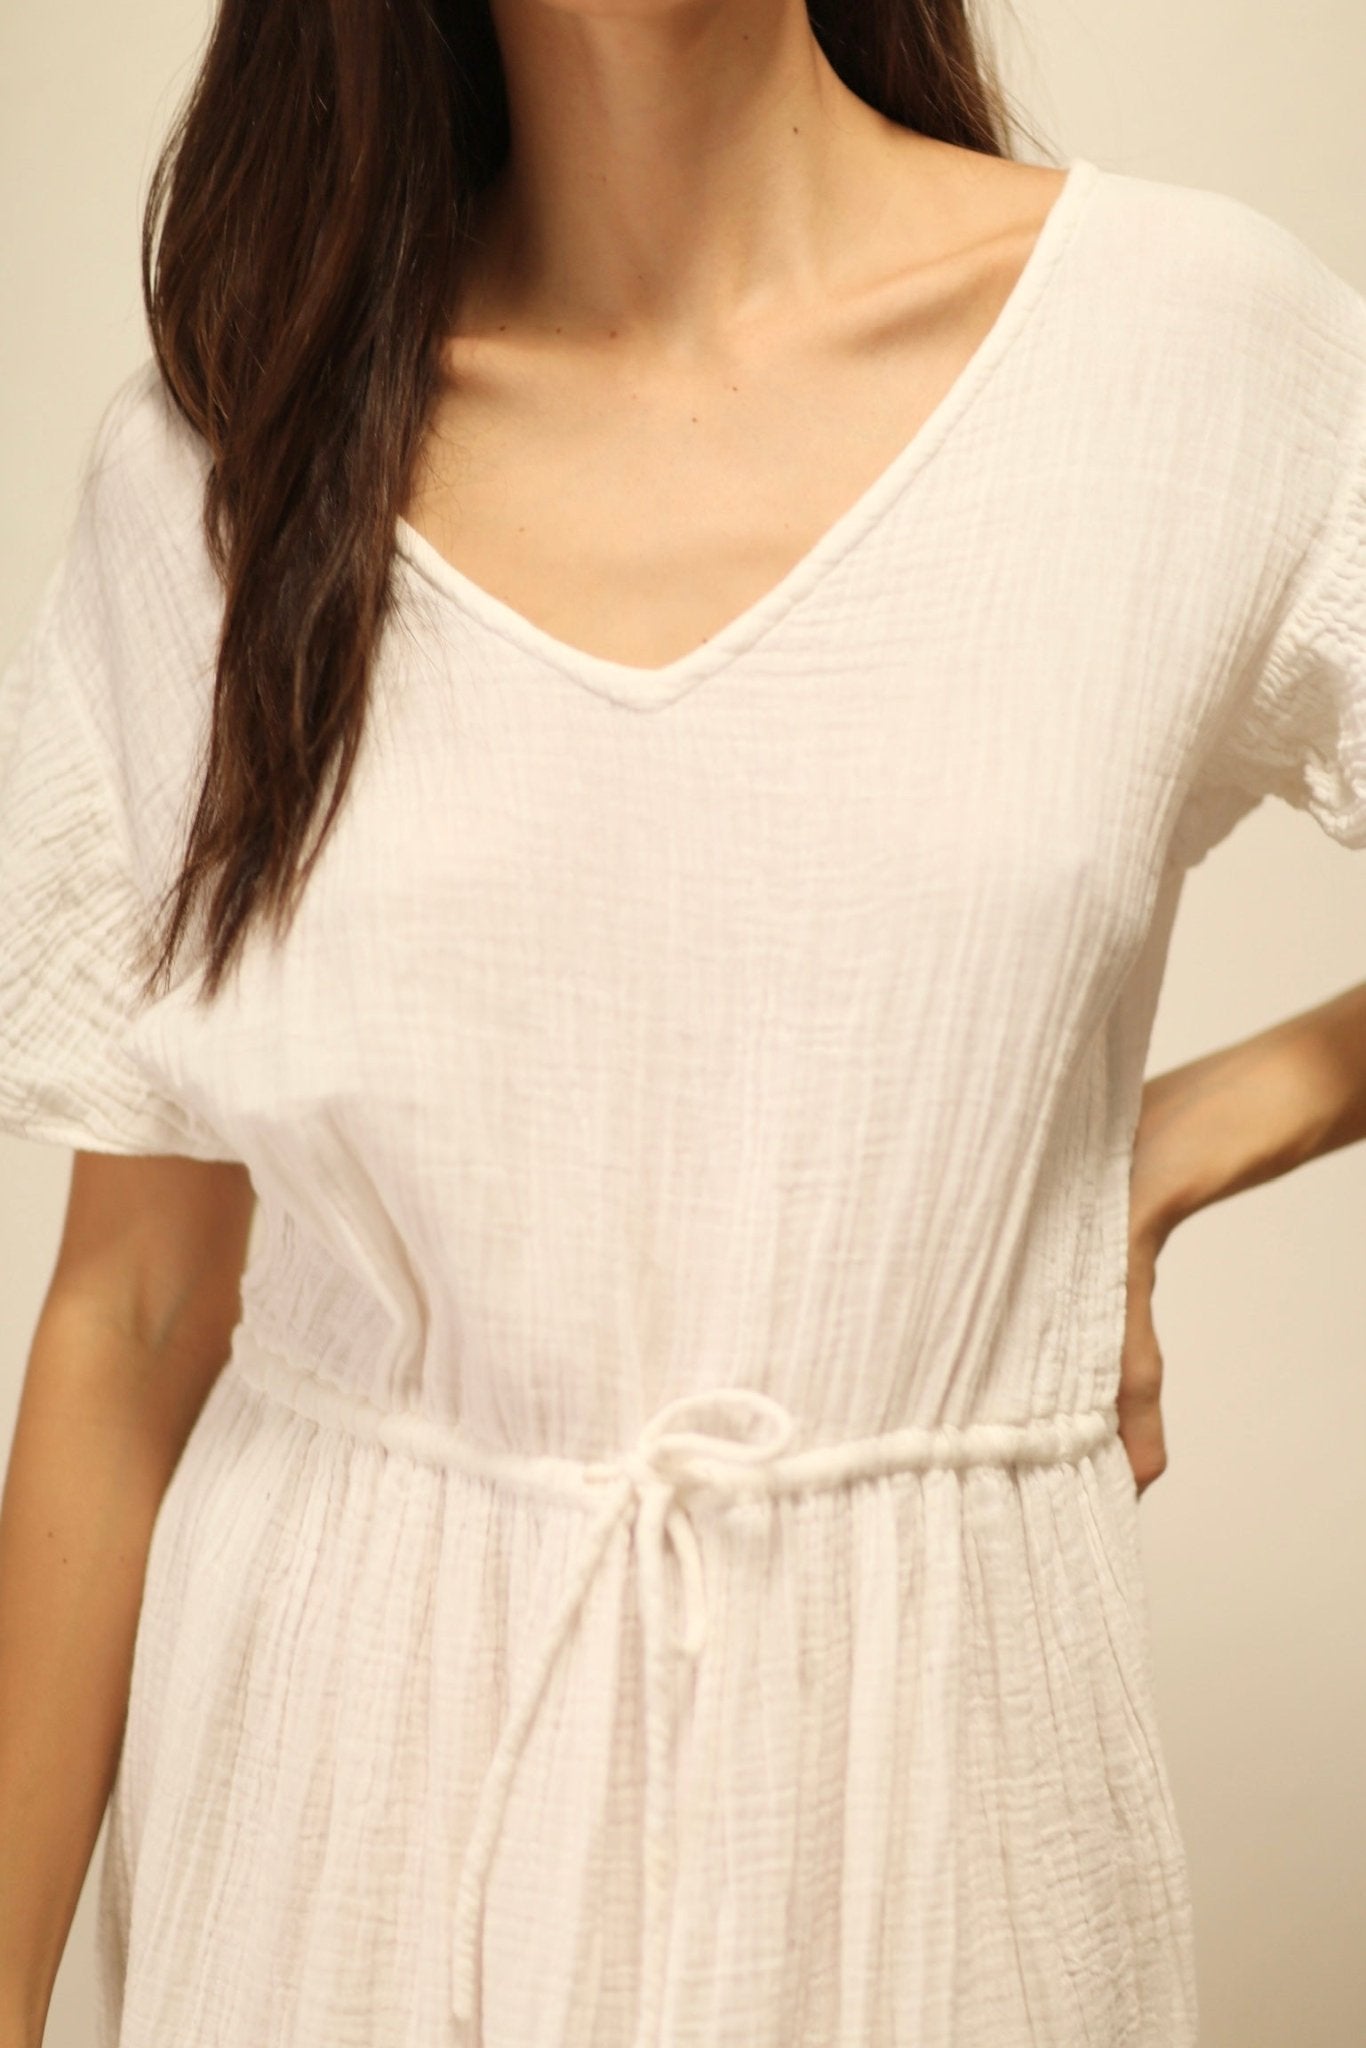 CASSANDRA WHITE DRESS 100% COTTON - BANGKOK TAILOR CLOTHING STORE - HANDMADE CLOTHING